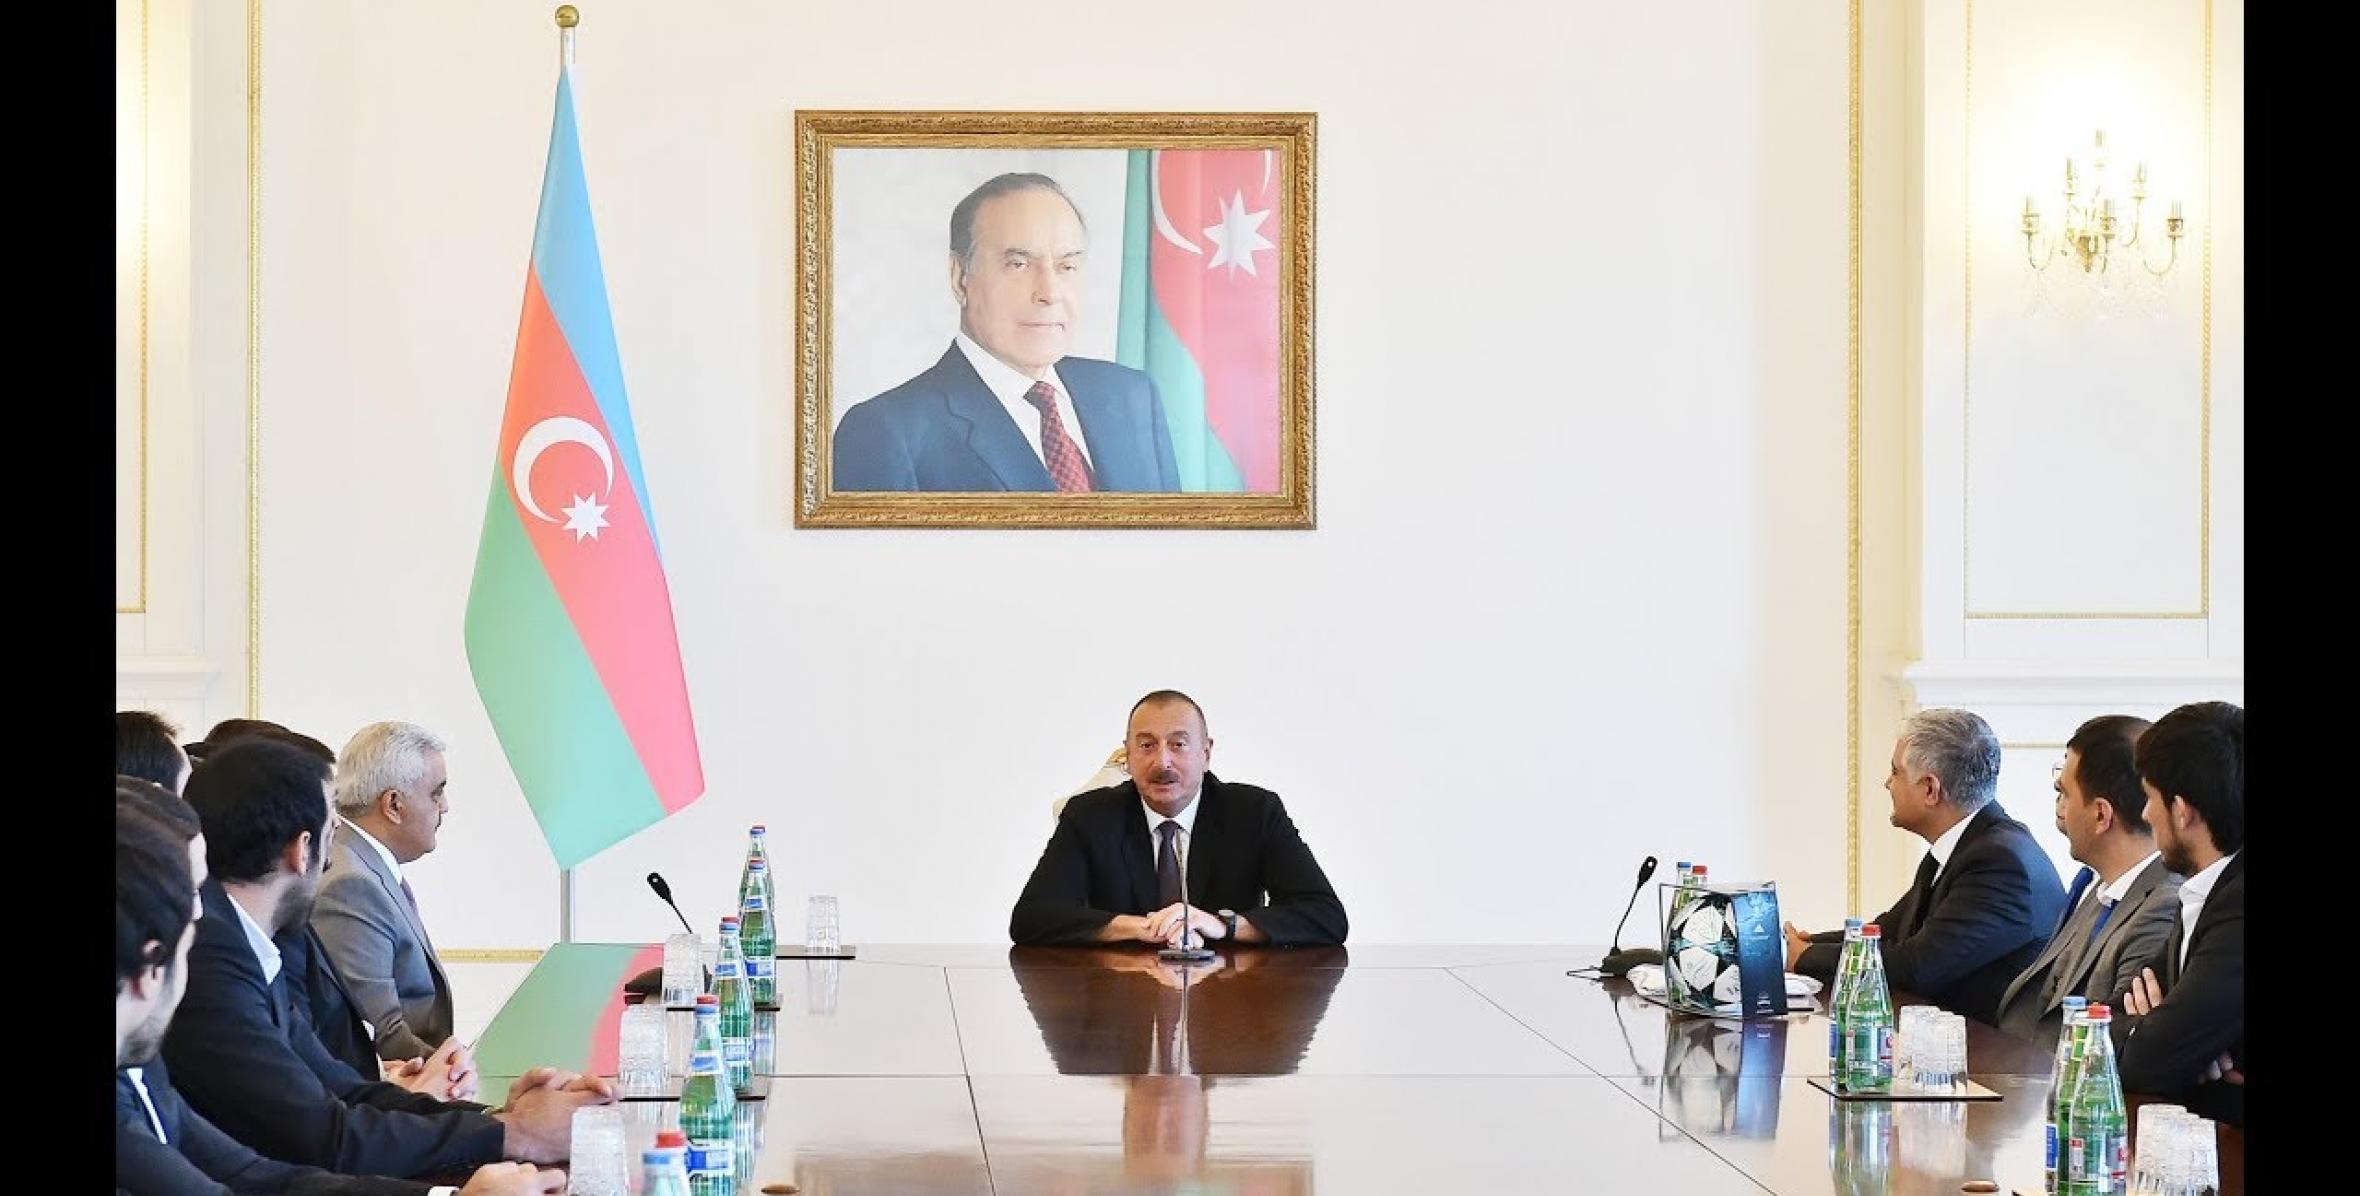 Speech by Ilham Aliyev at the reception of the squad of Qarabag football club